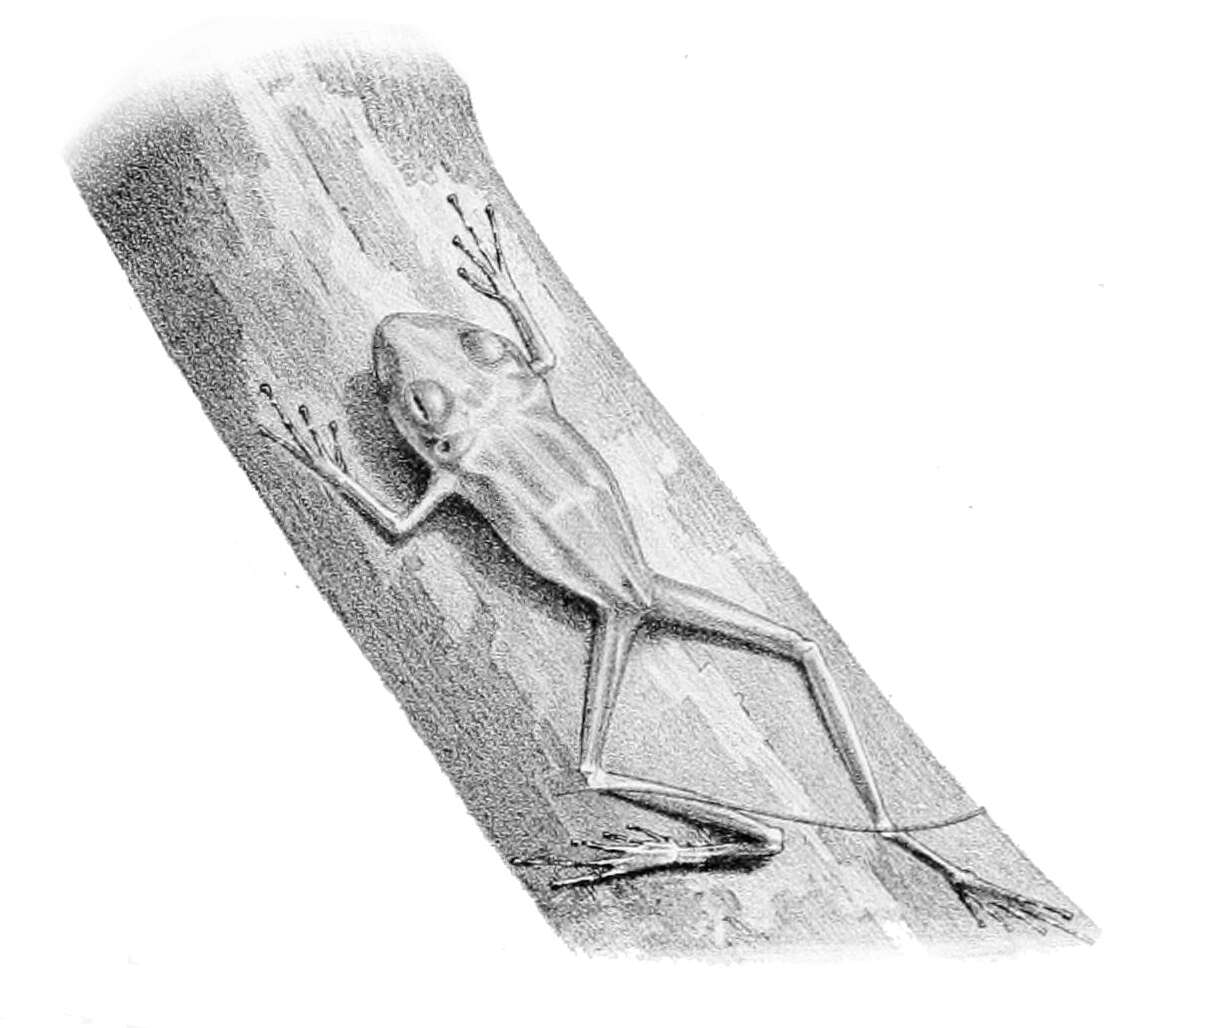 Image de Pristimantis cerasinus (Cope 1875)